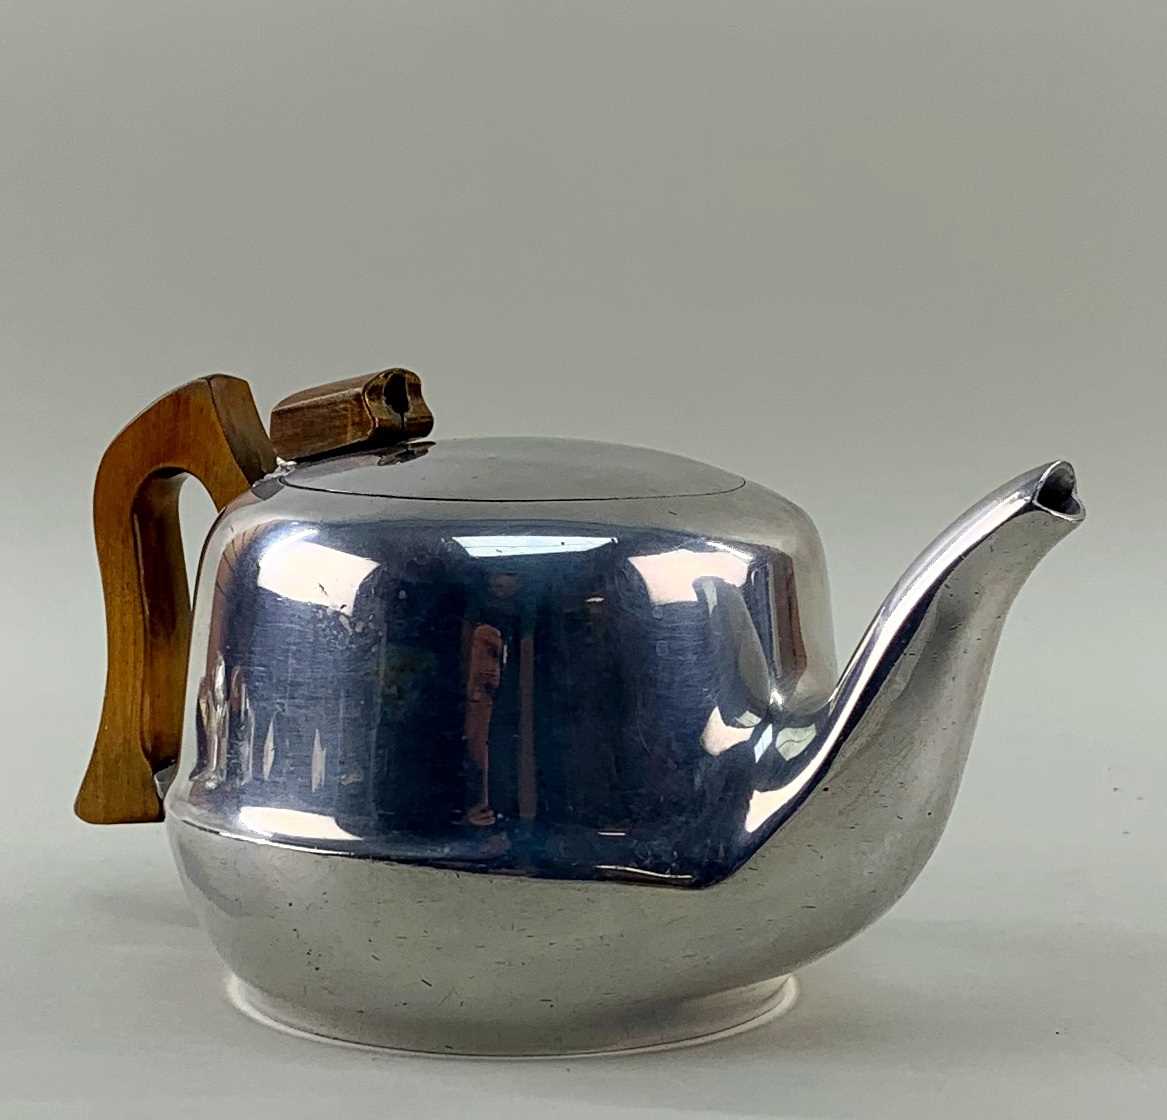 1960's PIQUOT WARE PEWTER TEA SERVICE comprising teapot, hot water jug, cream jug, sugar basin and - Image 3 of 8